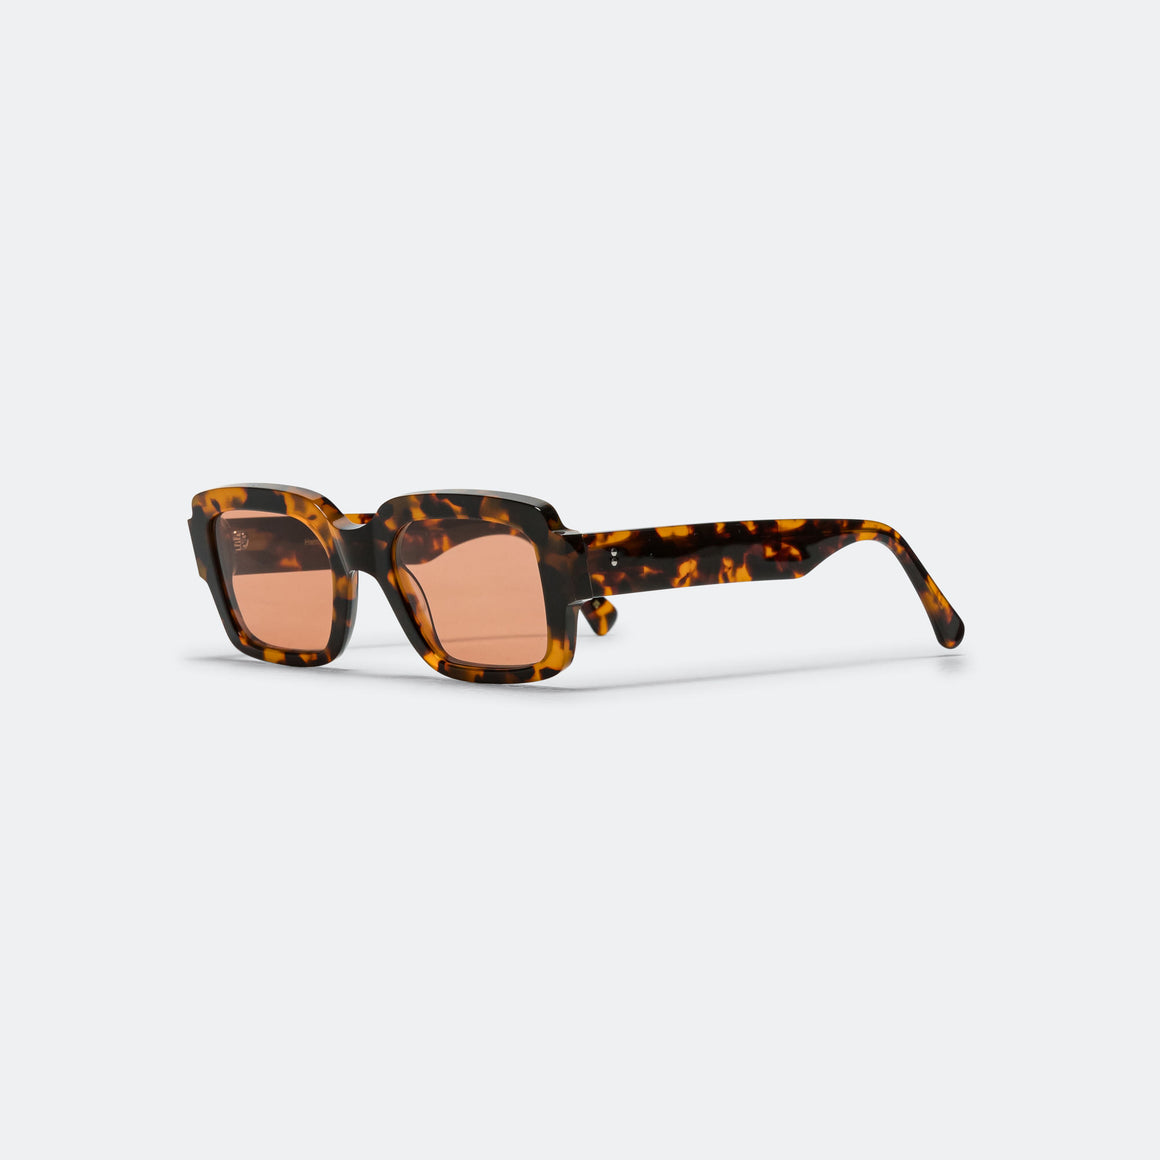 Monokel Eyewear - Apollo - Havana/Orange Solid - UP THERE